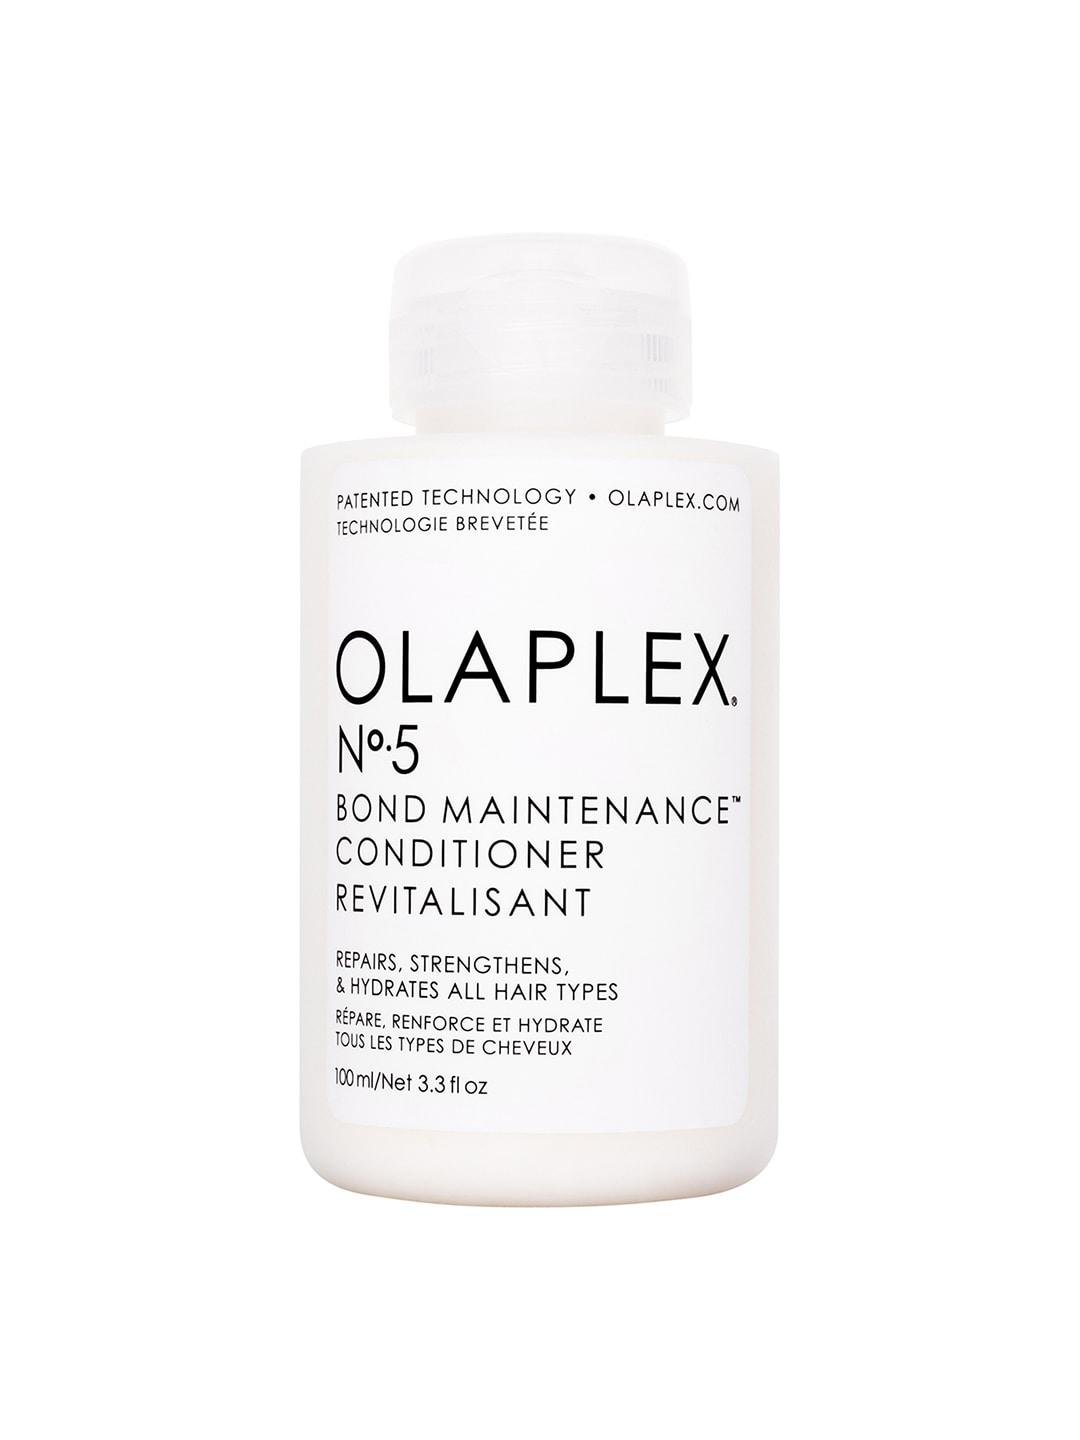 OLAPLEX No. 5 Bond Maintenance Hair Conditioner Revitalisant - 100ml